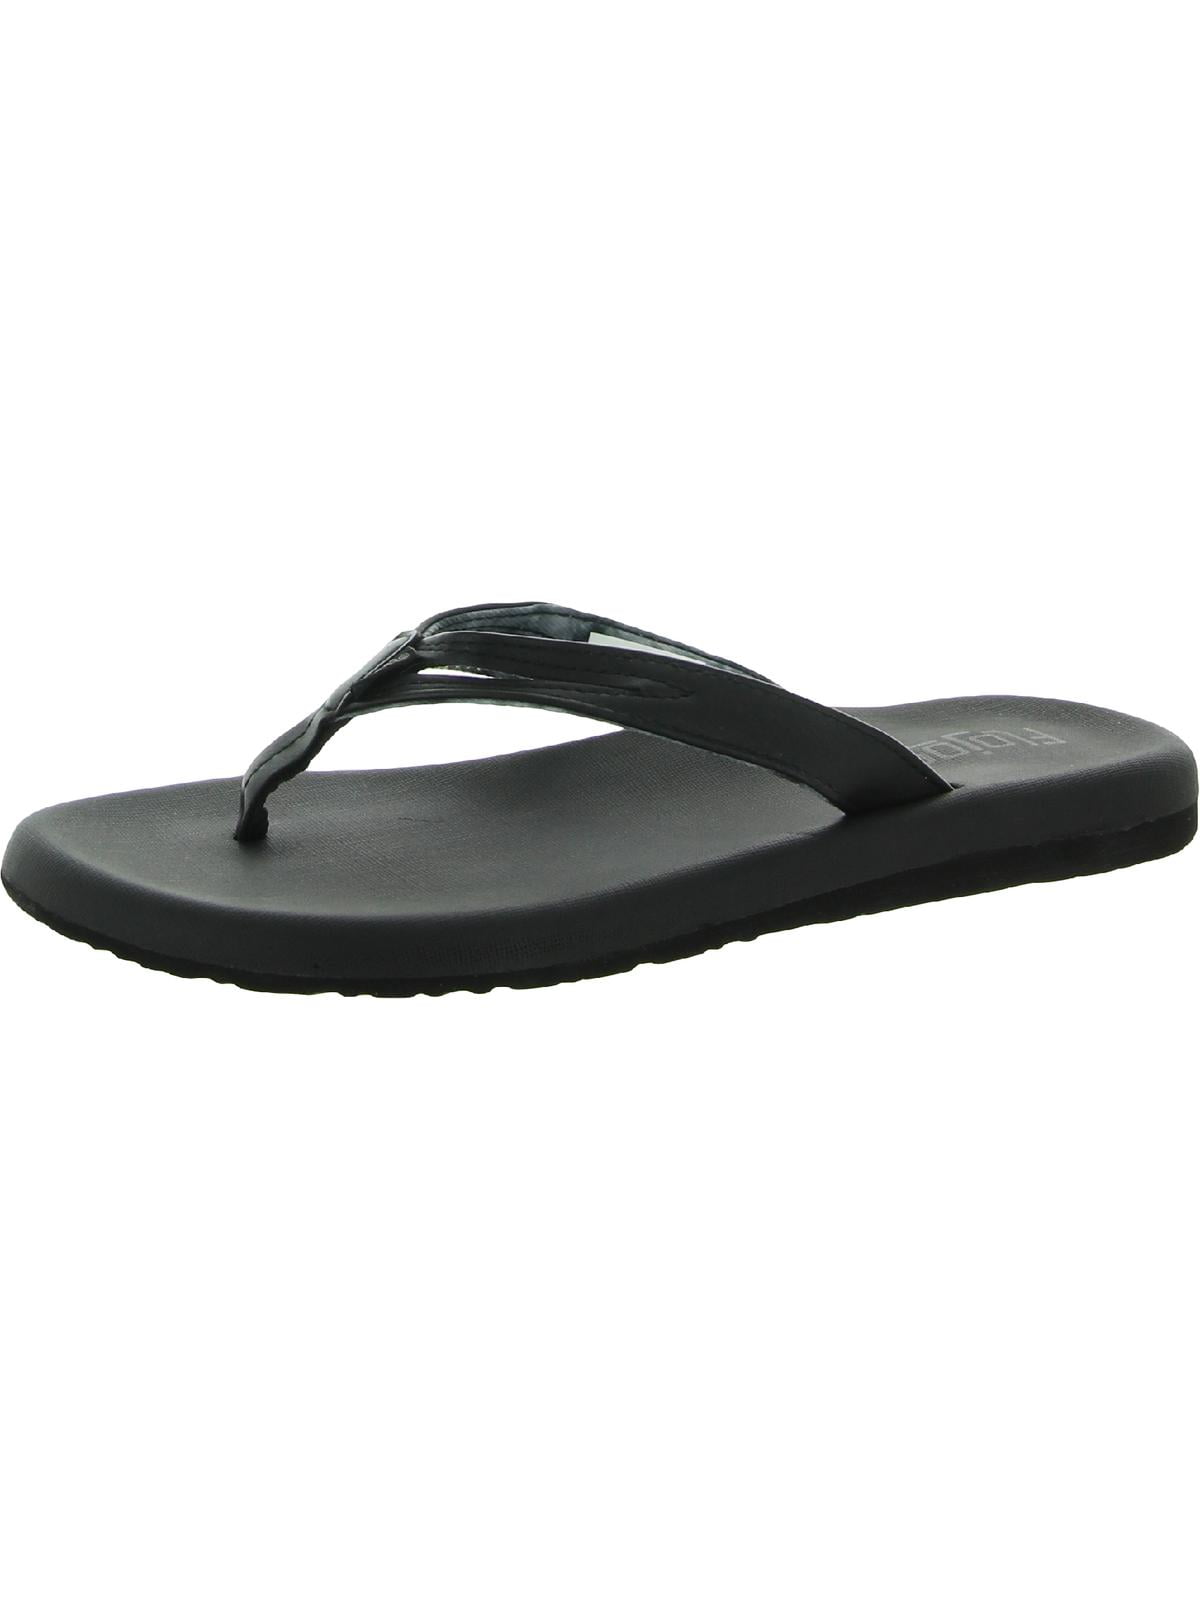 Flojos Womens Faux Leather Flip-Flop Thong Sandals - Walmart.com